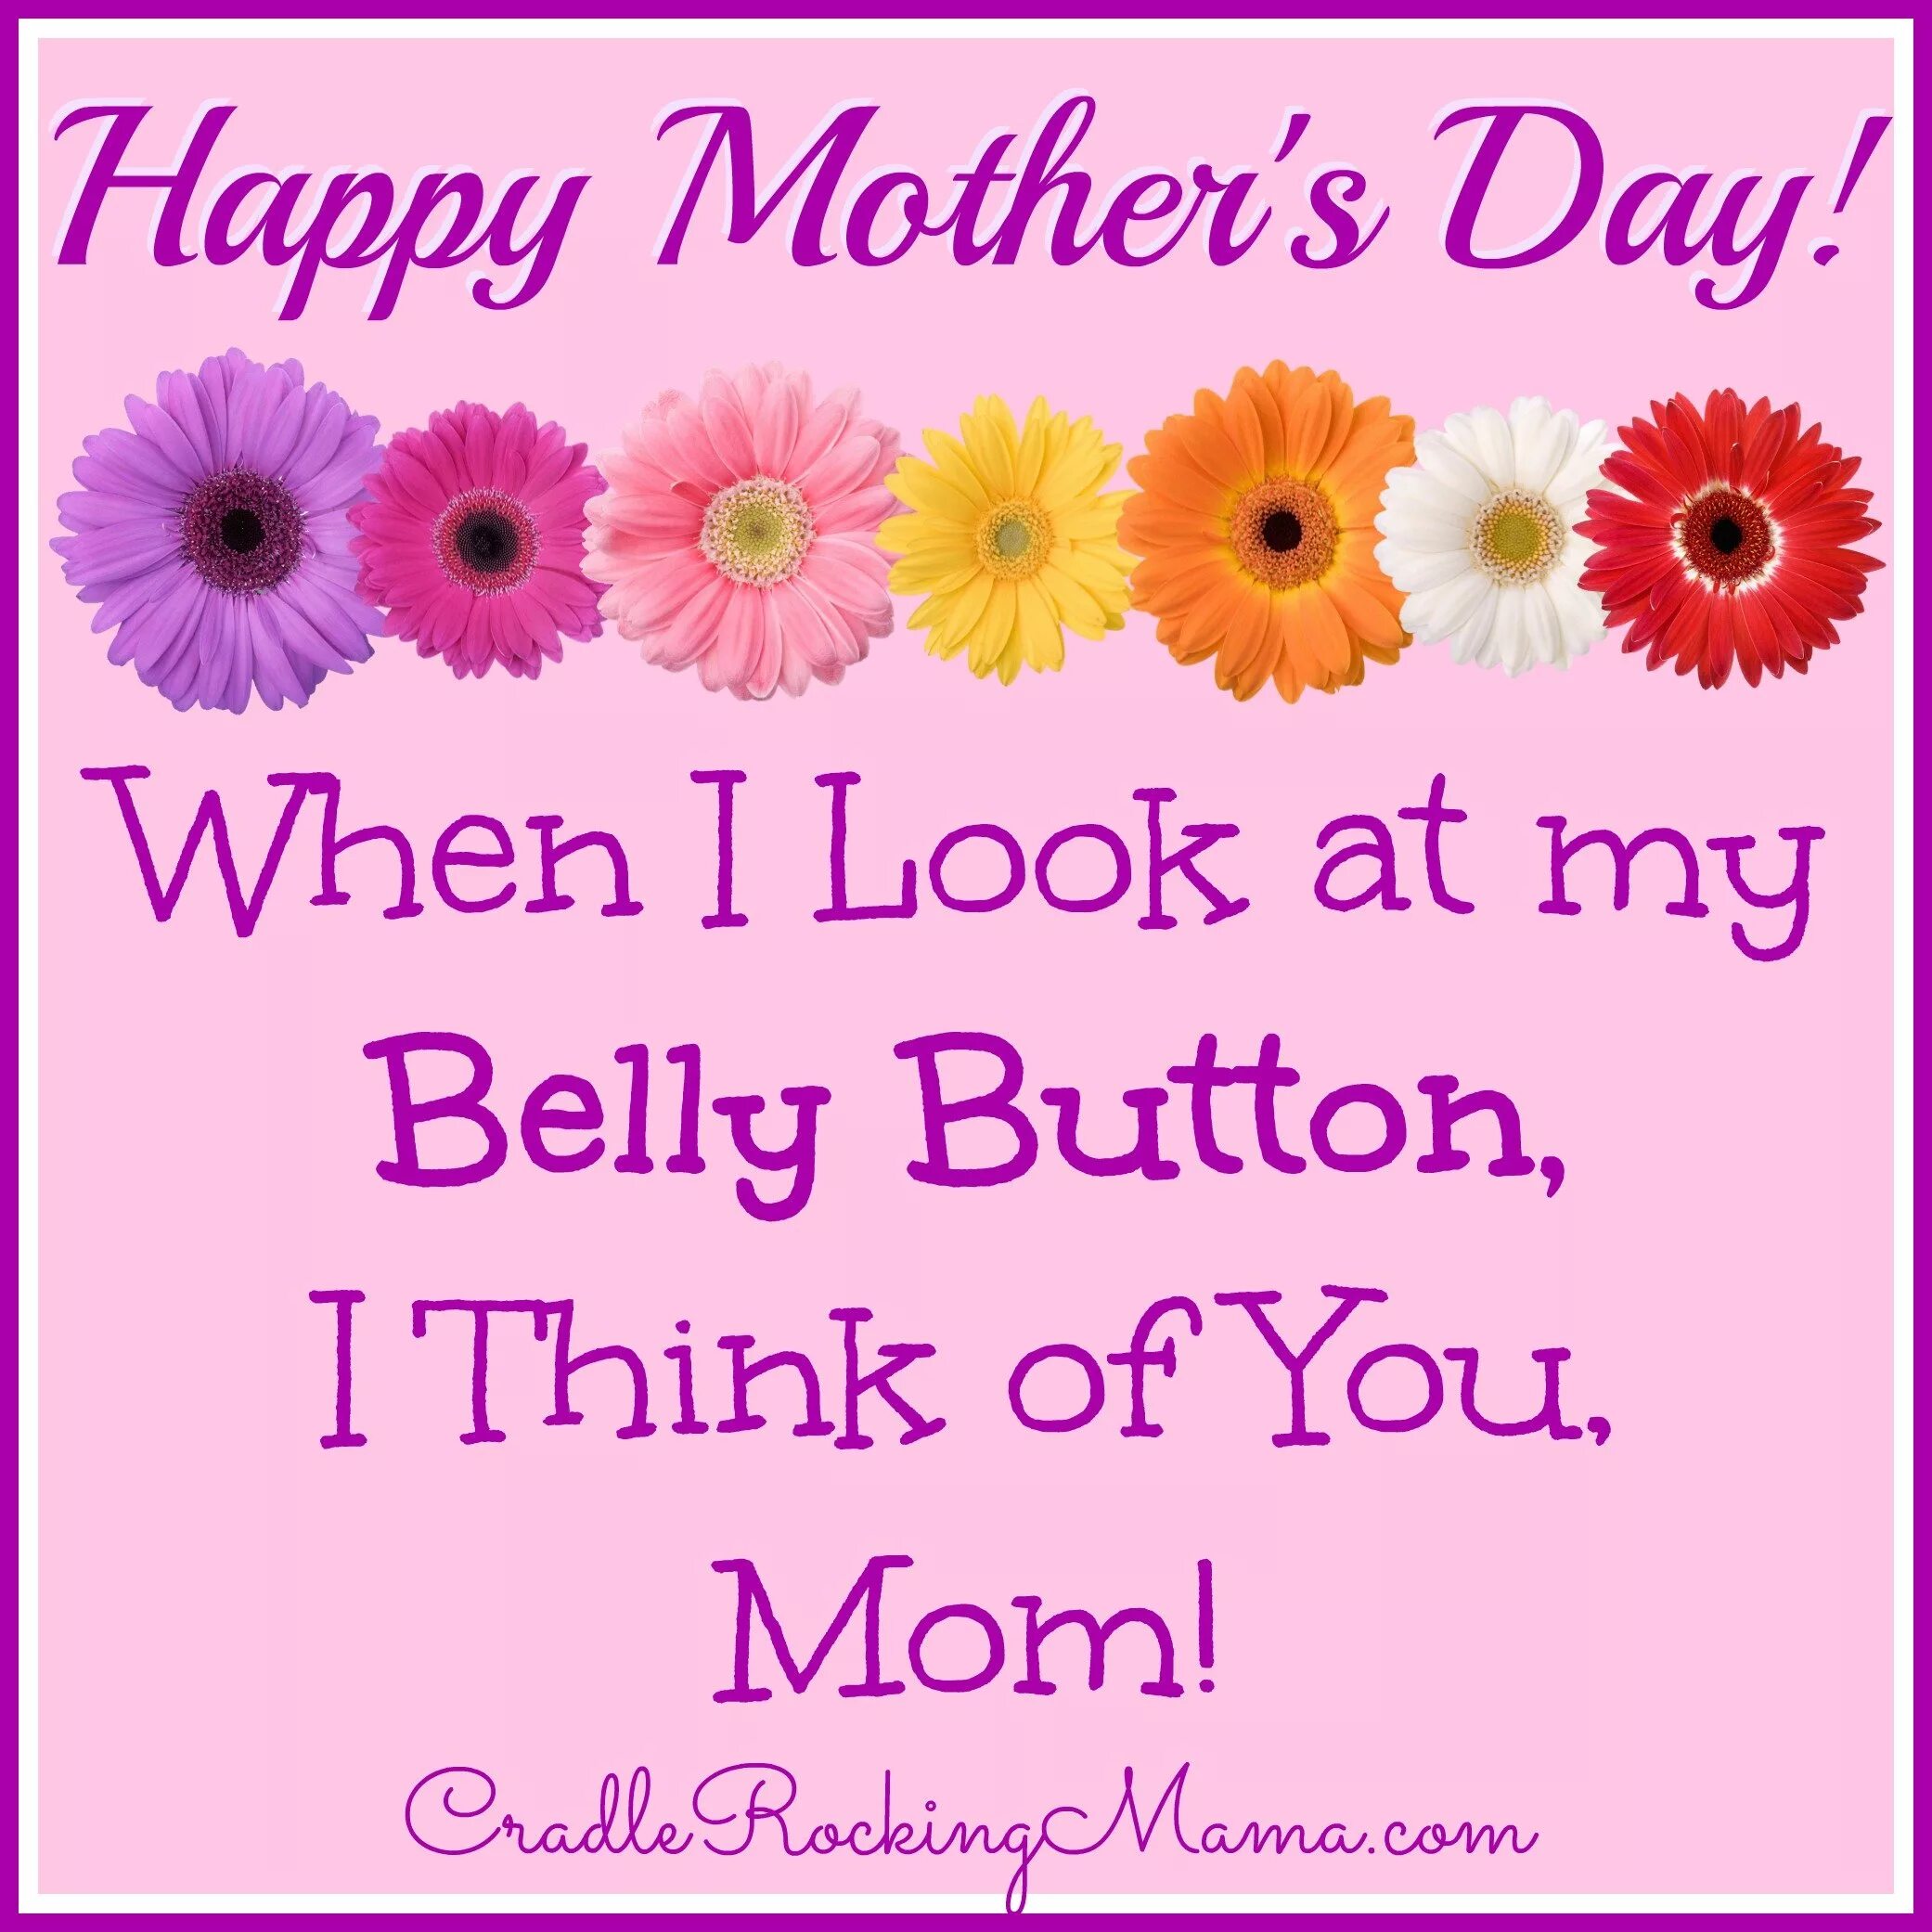 День матери на английском языке. День матери на английском. Mothers Day when. Поздравление с днем матери на английском языке. Открытки с днём матери красивые на английском.